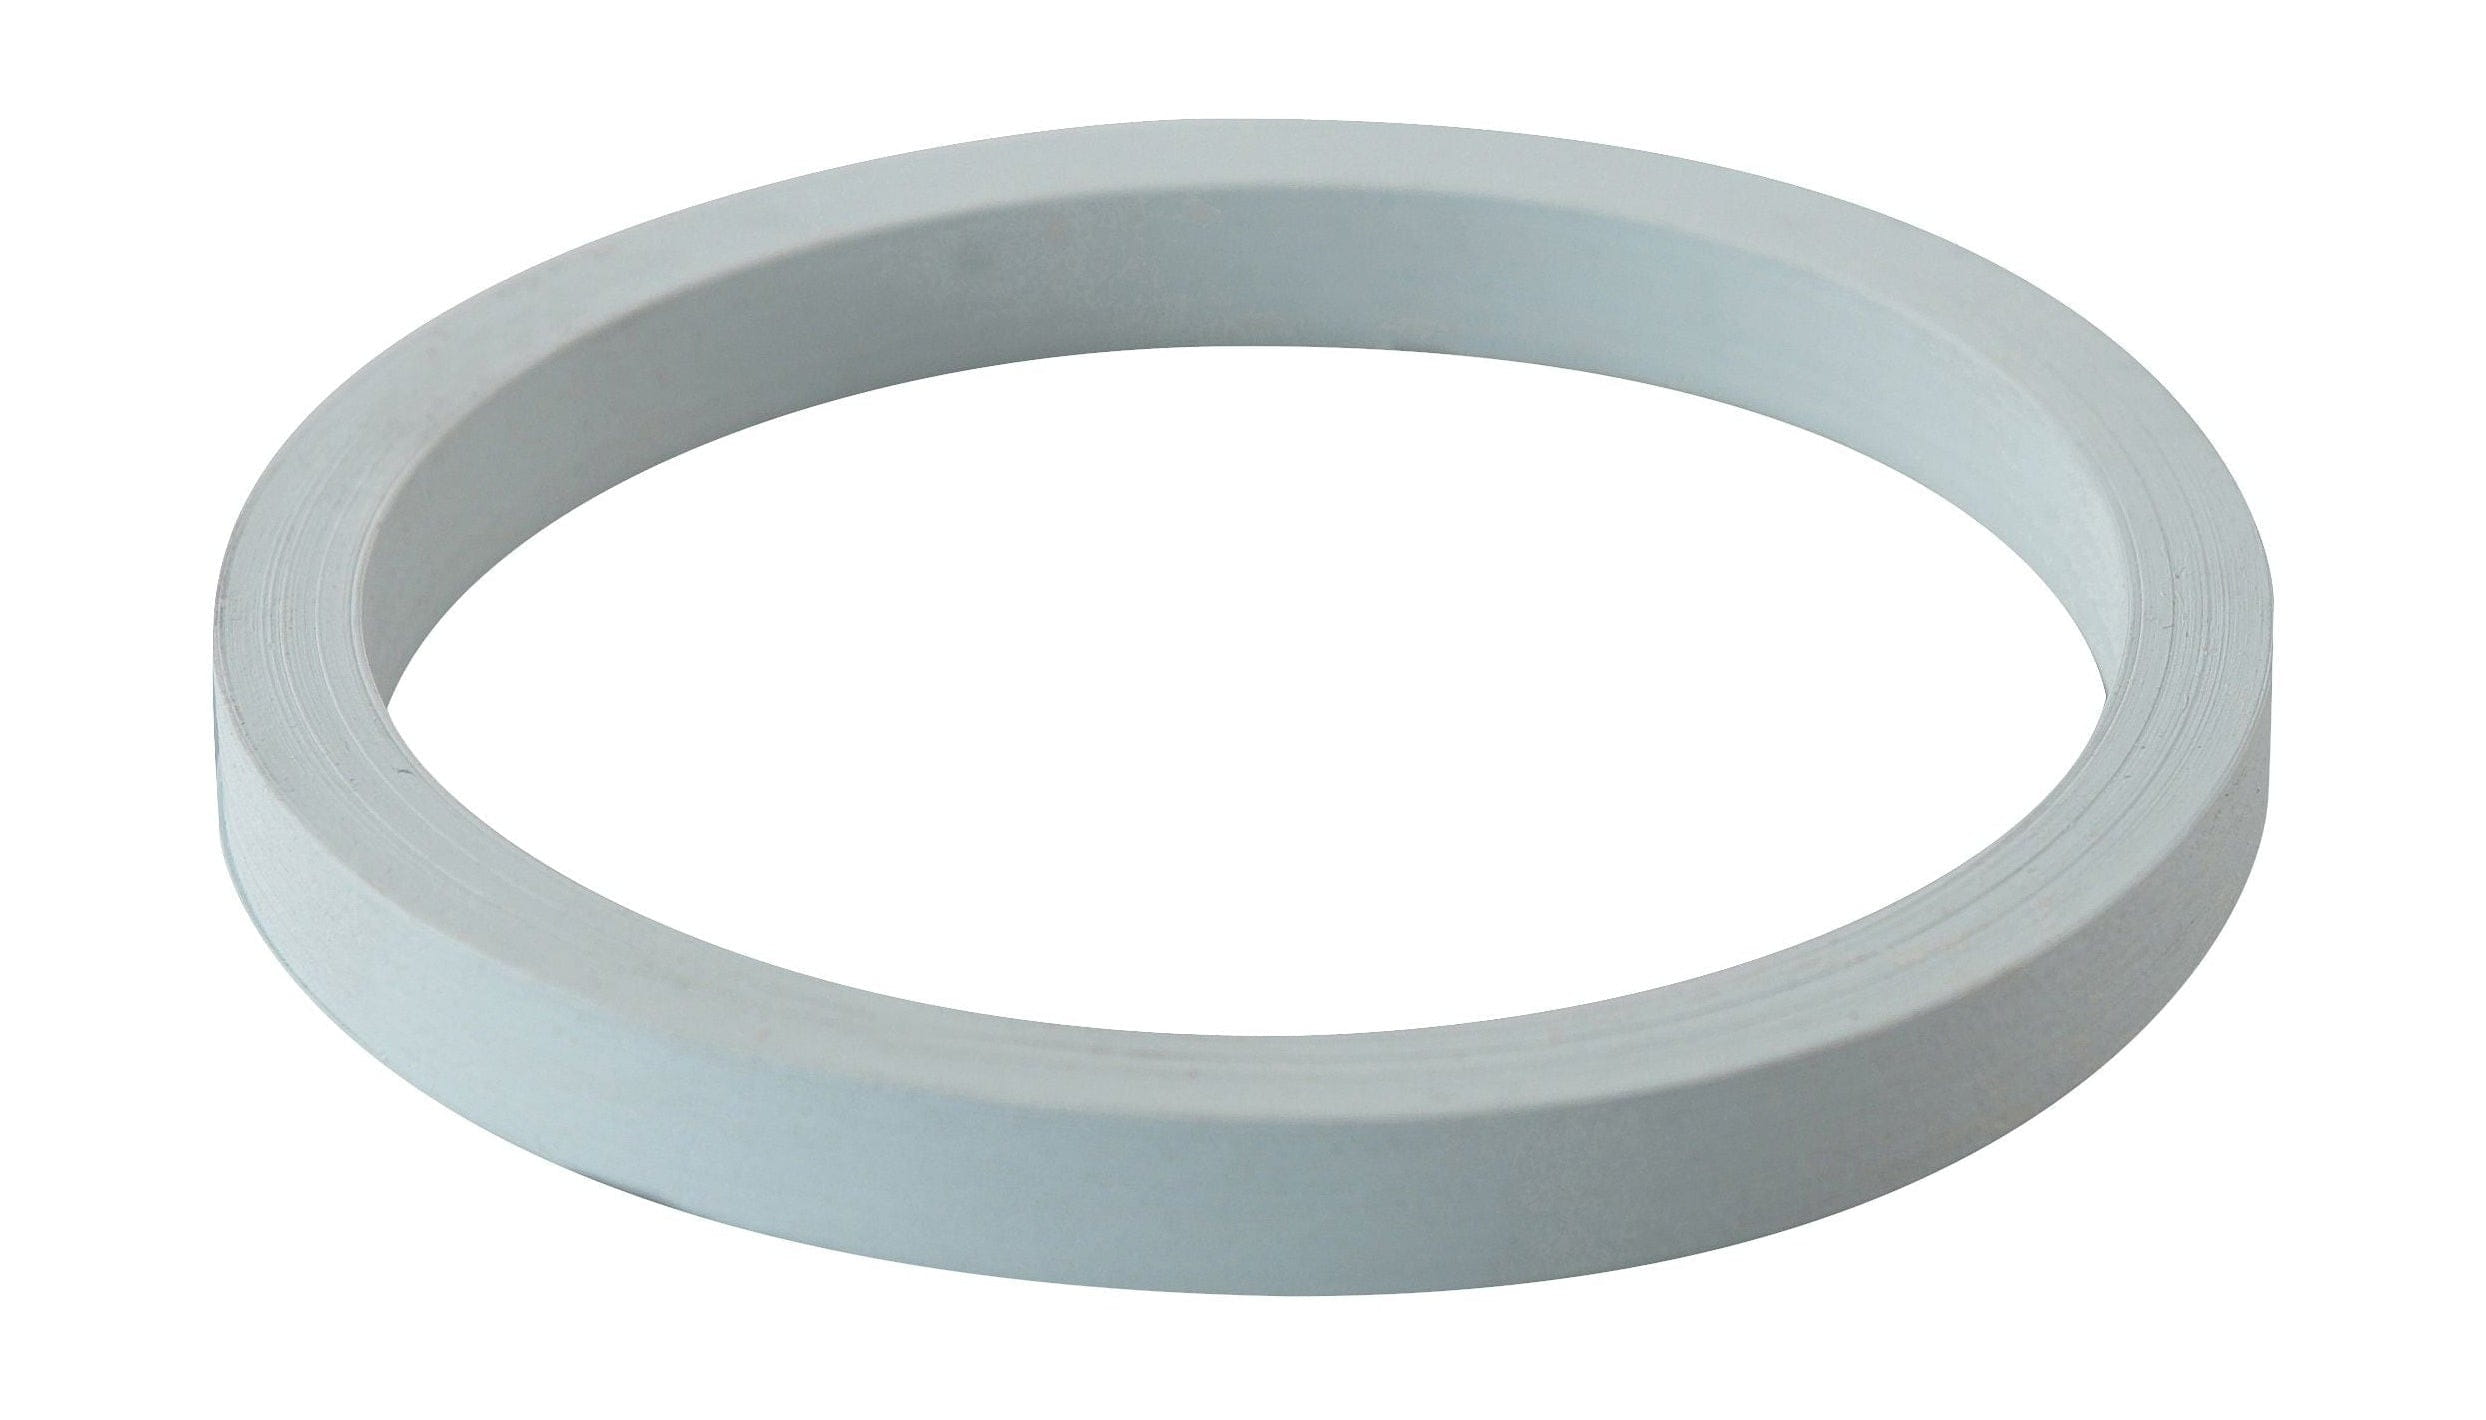 Rosti Klassiker unterer Ring für Mixer 0,5 l, grau